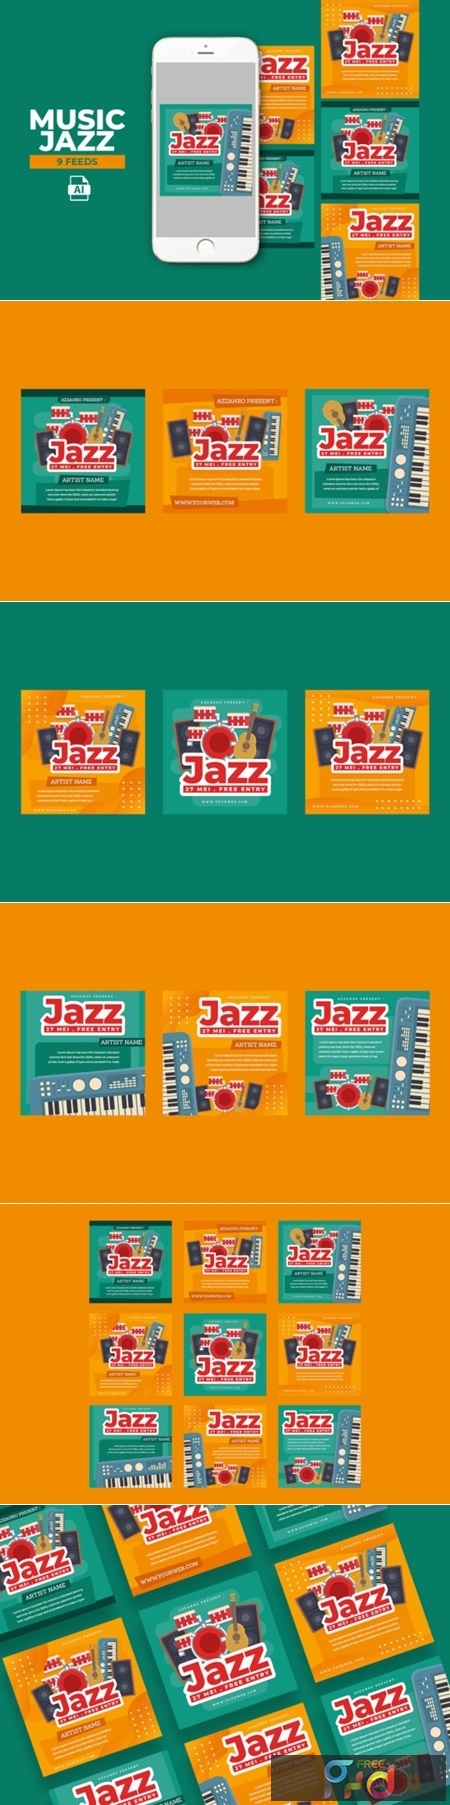 Music Jazz Instagram Templates 2013549 1